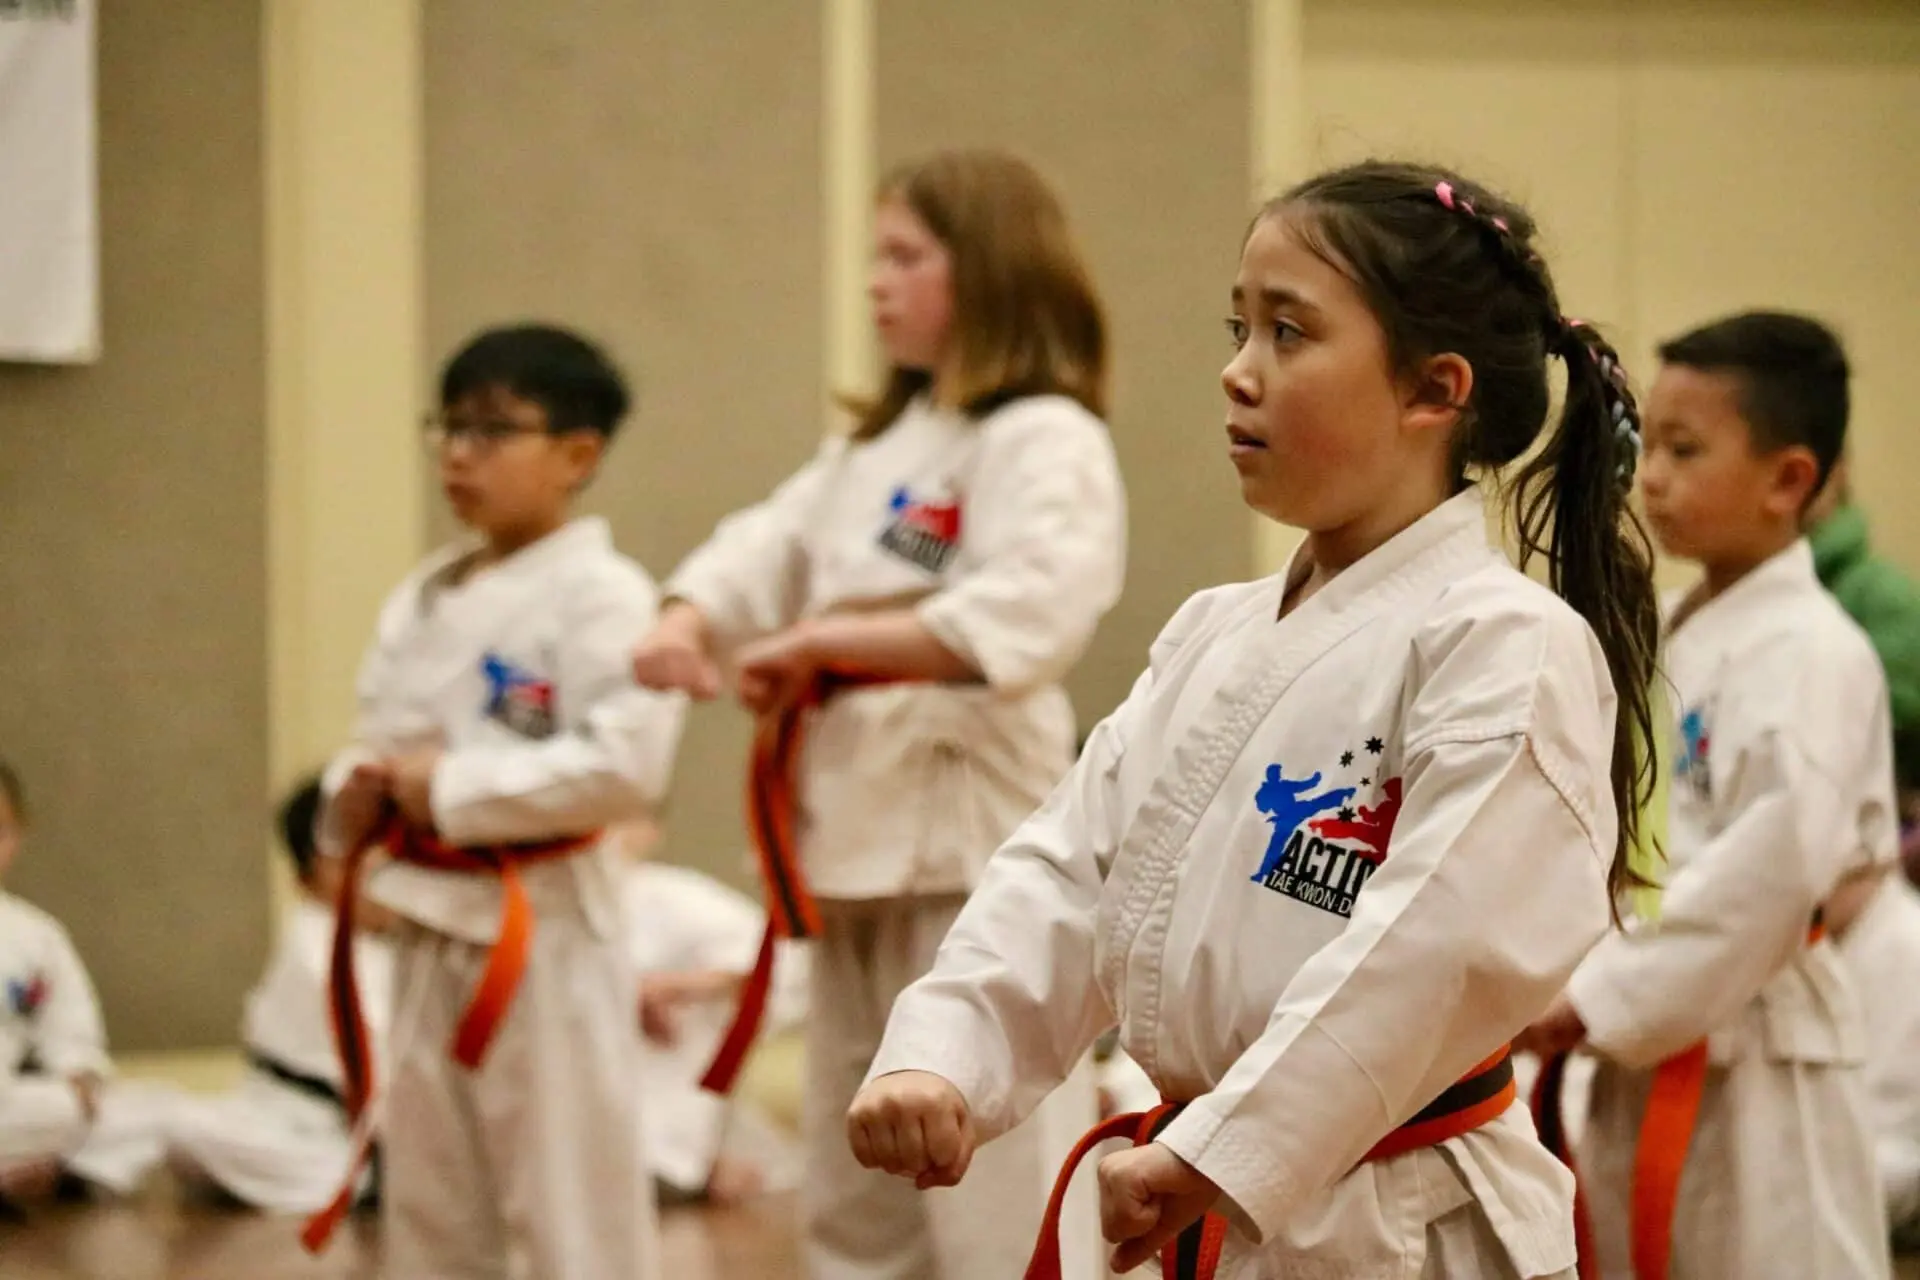 Action Taekwondo Kids in action.